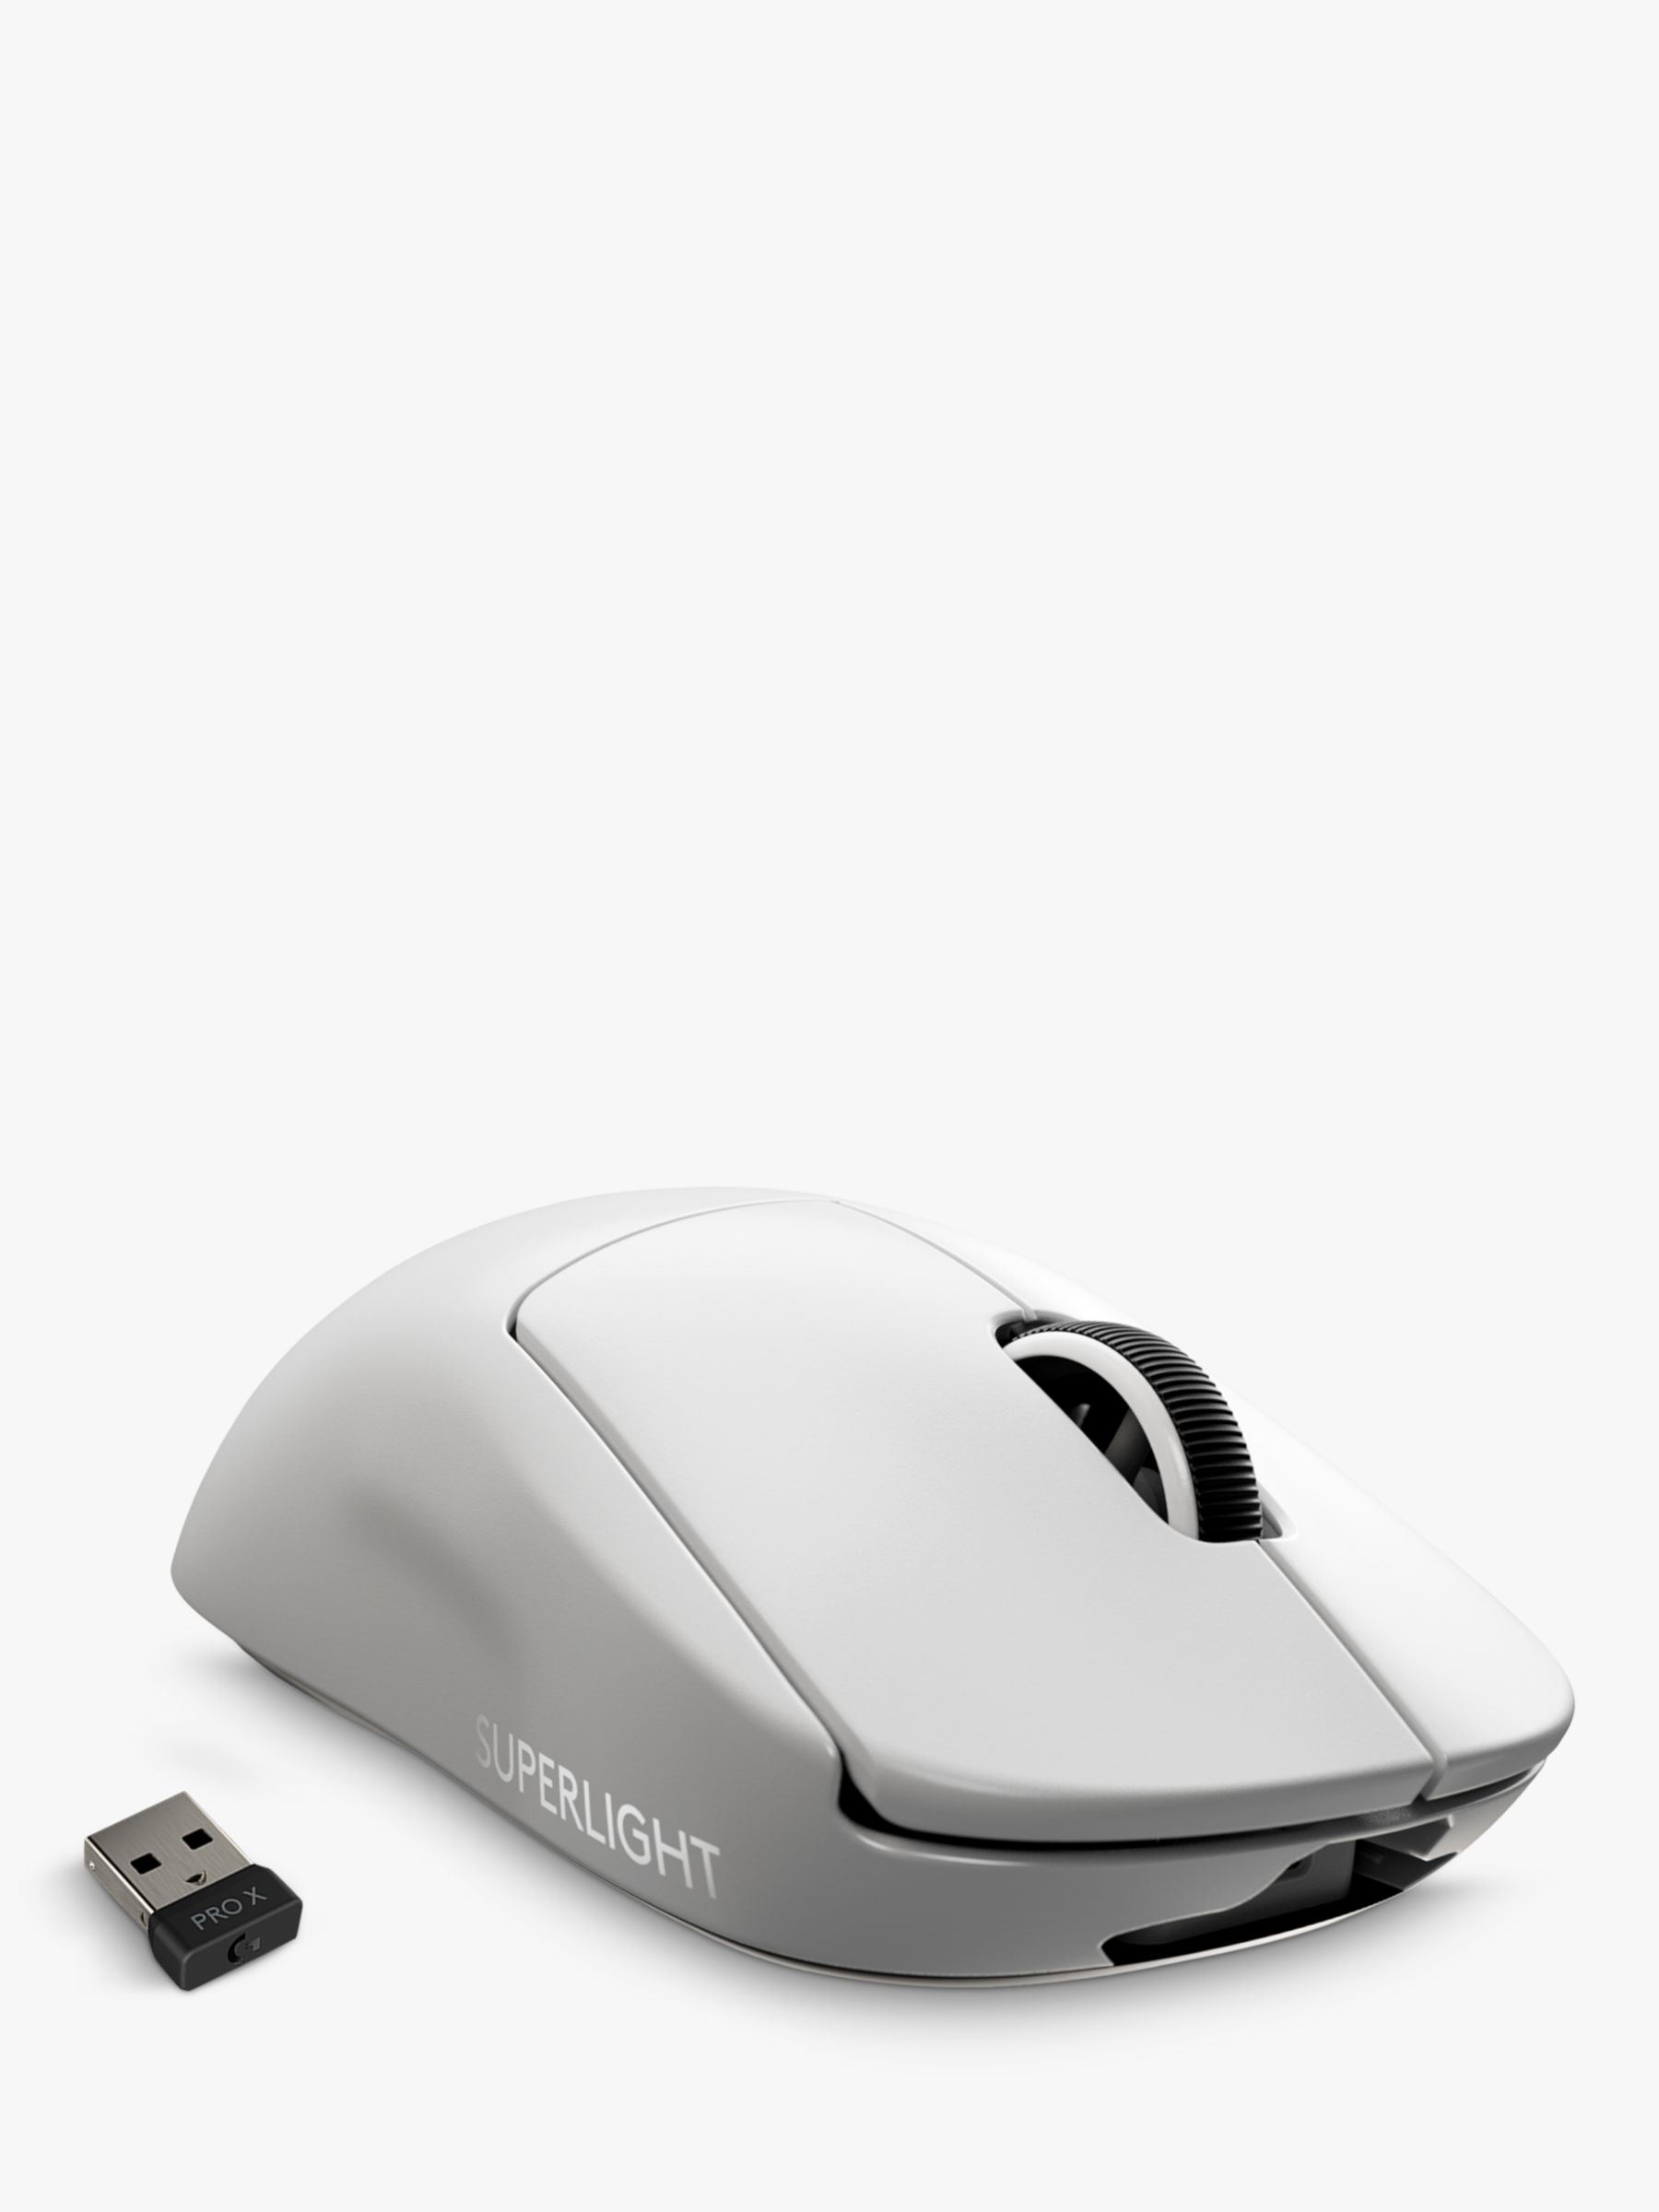 G Pro X Superlight Bluetooth Wireless Mouse, White